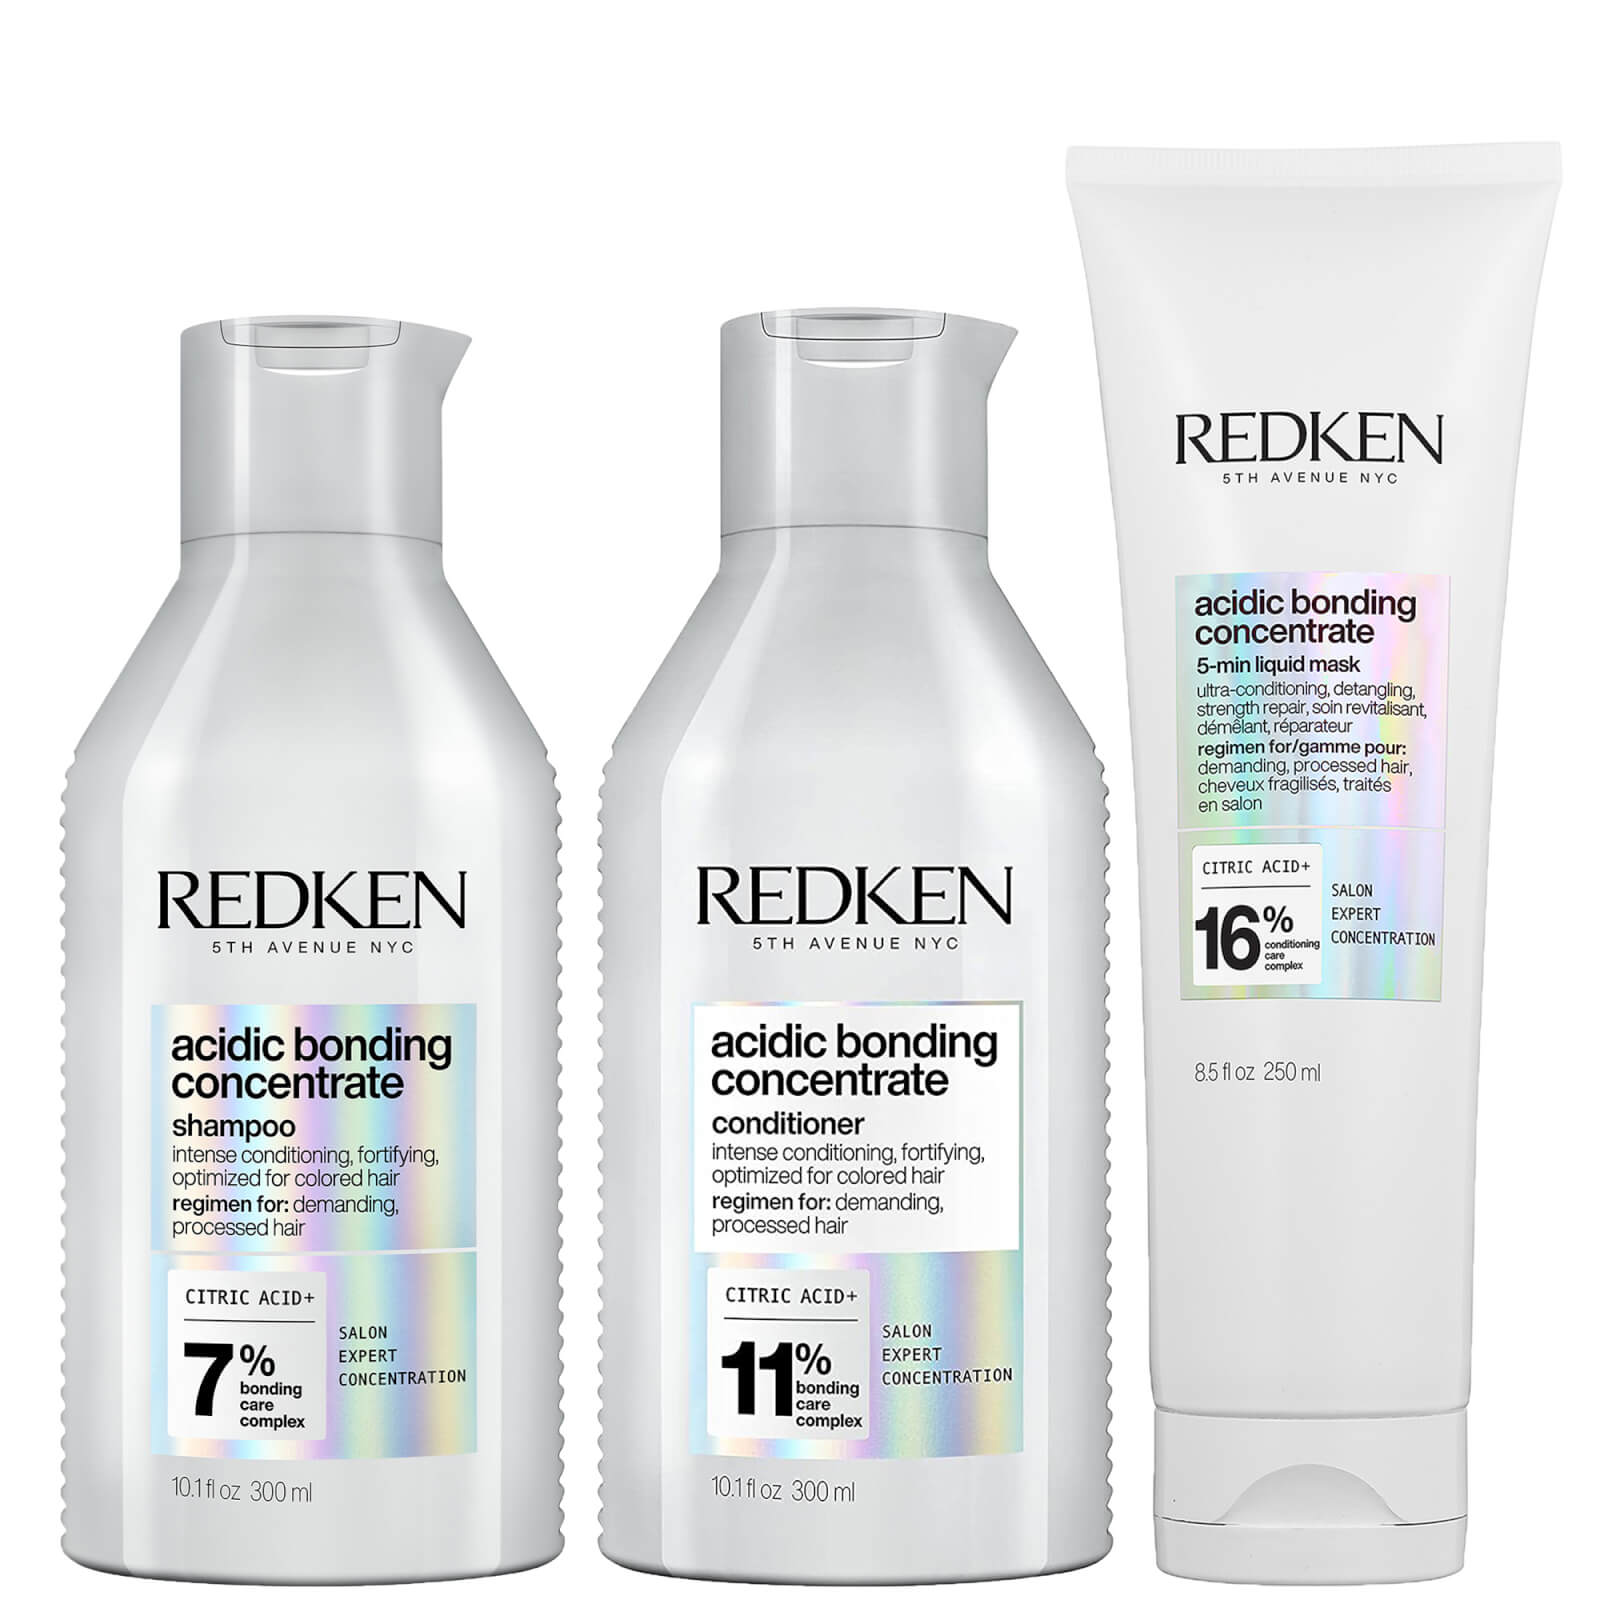 Redken Acidic Bonding Concentrate Shampoo, Conditioner and 5-Minute Liquid Hair Mask Bond Repair Bun